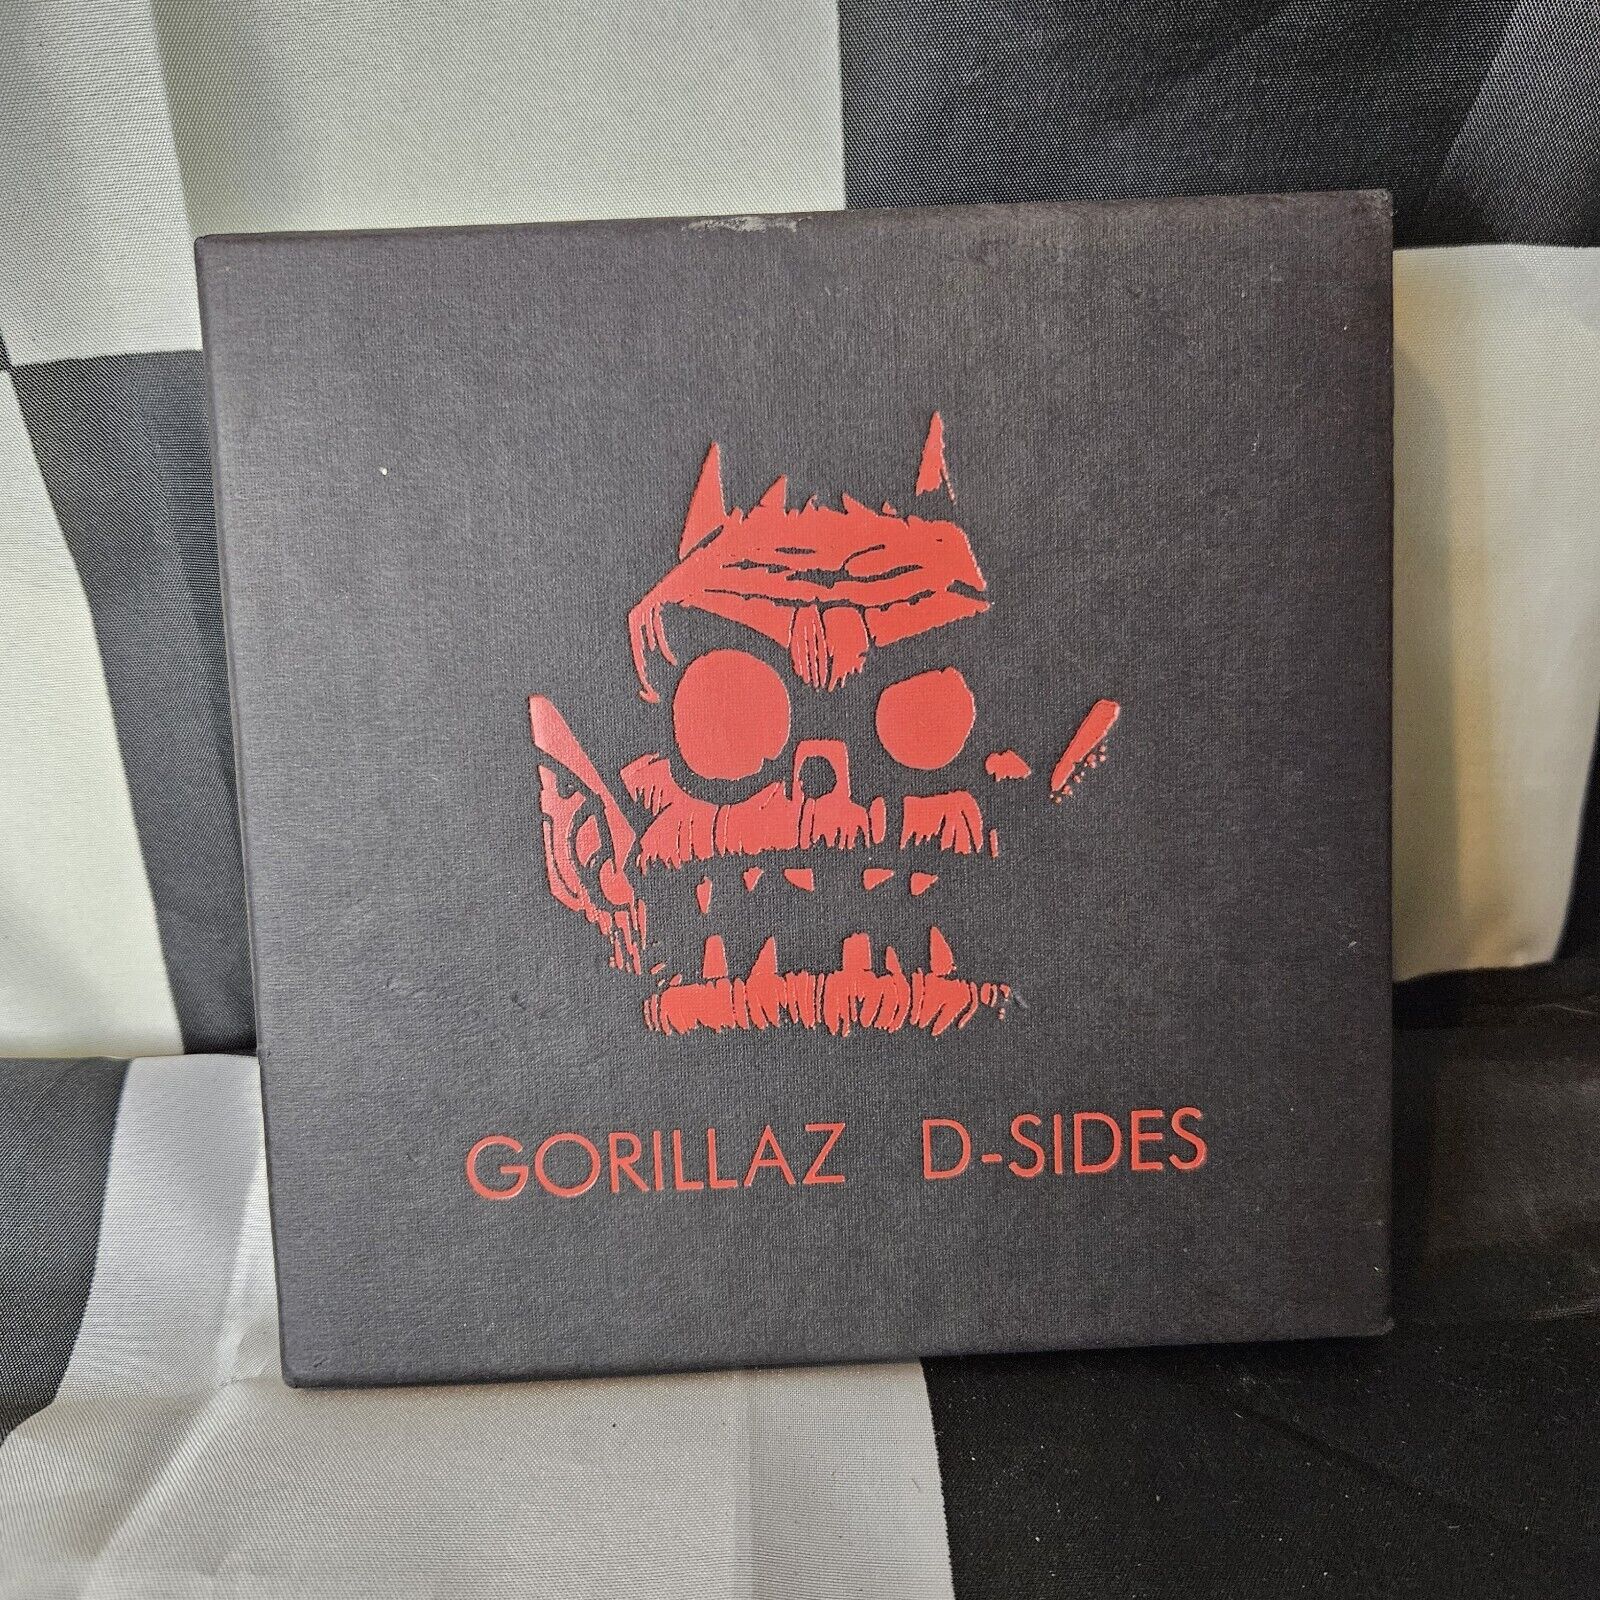 D-Sides [Deluxe] [Limited] by Gorillaz (CD, Nov-2007, 2 Discs, Virgin) Complete 